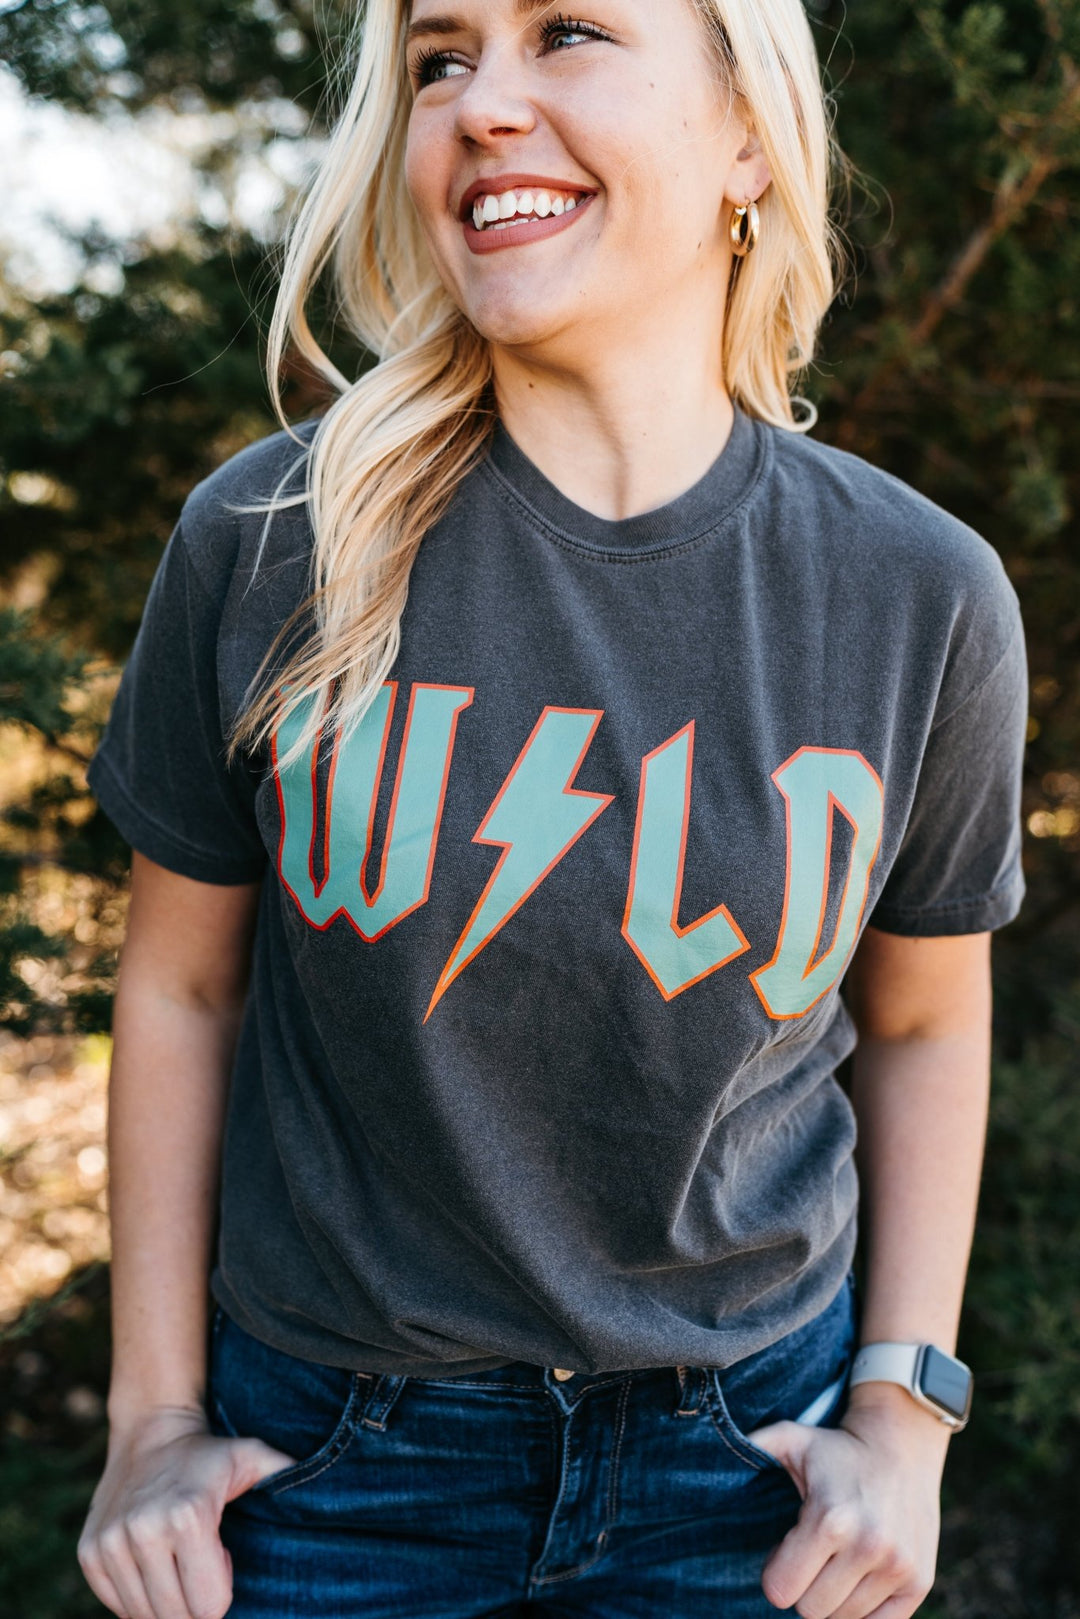 Wild Band Tee - Fan Girl Clothing